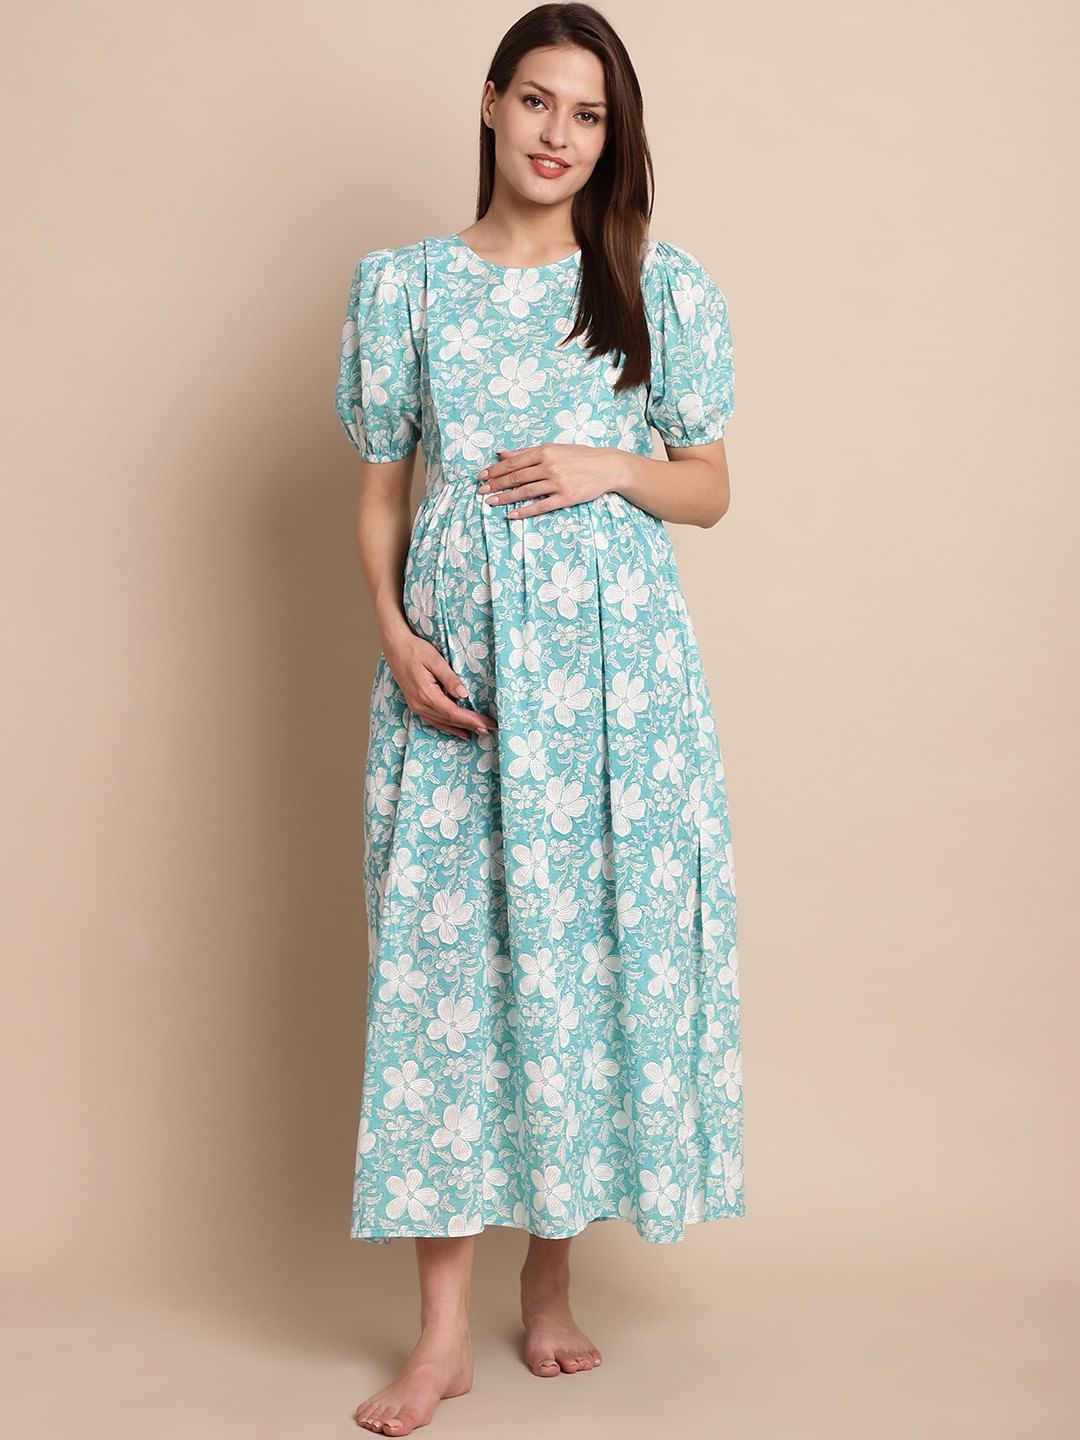 Sky Blue & White Floral Maternity Dress